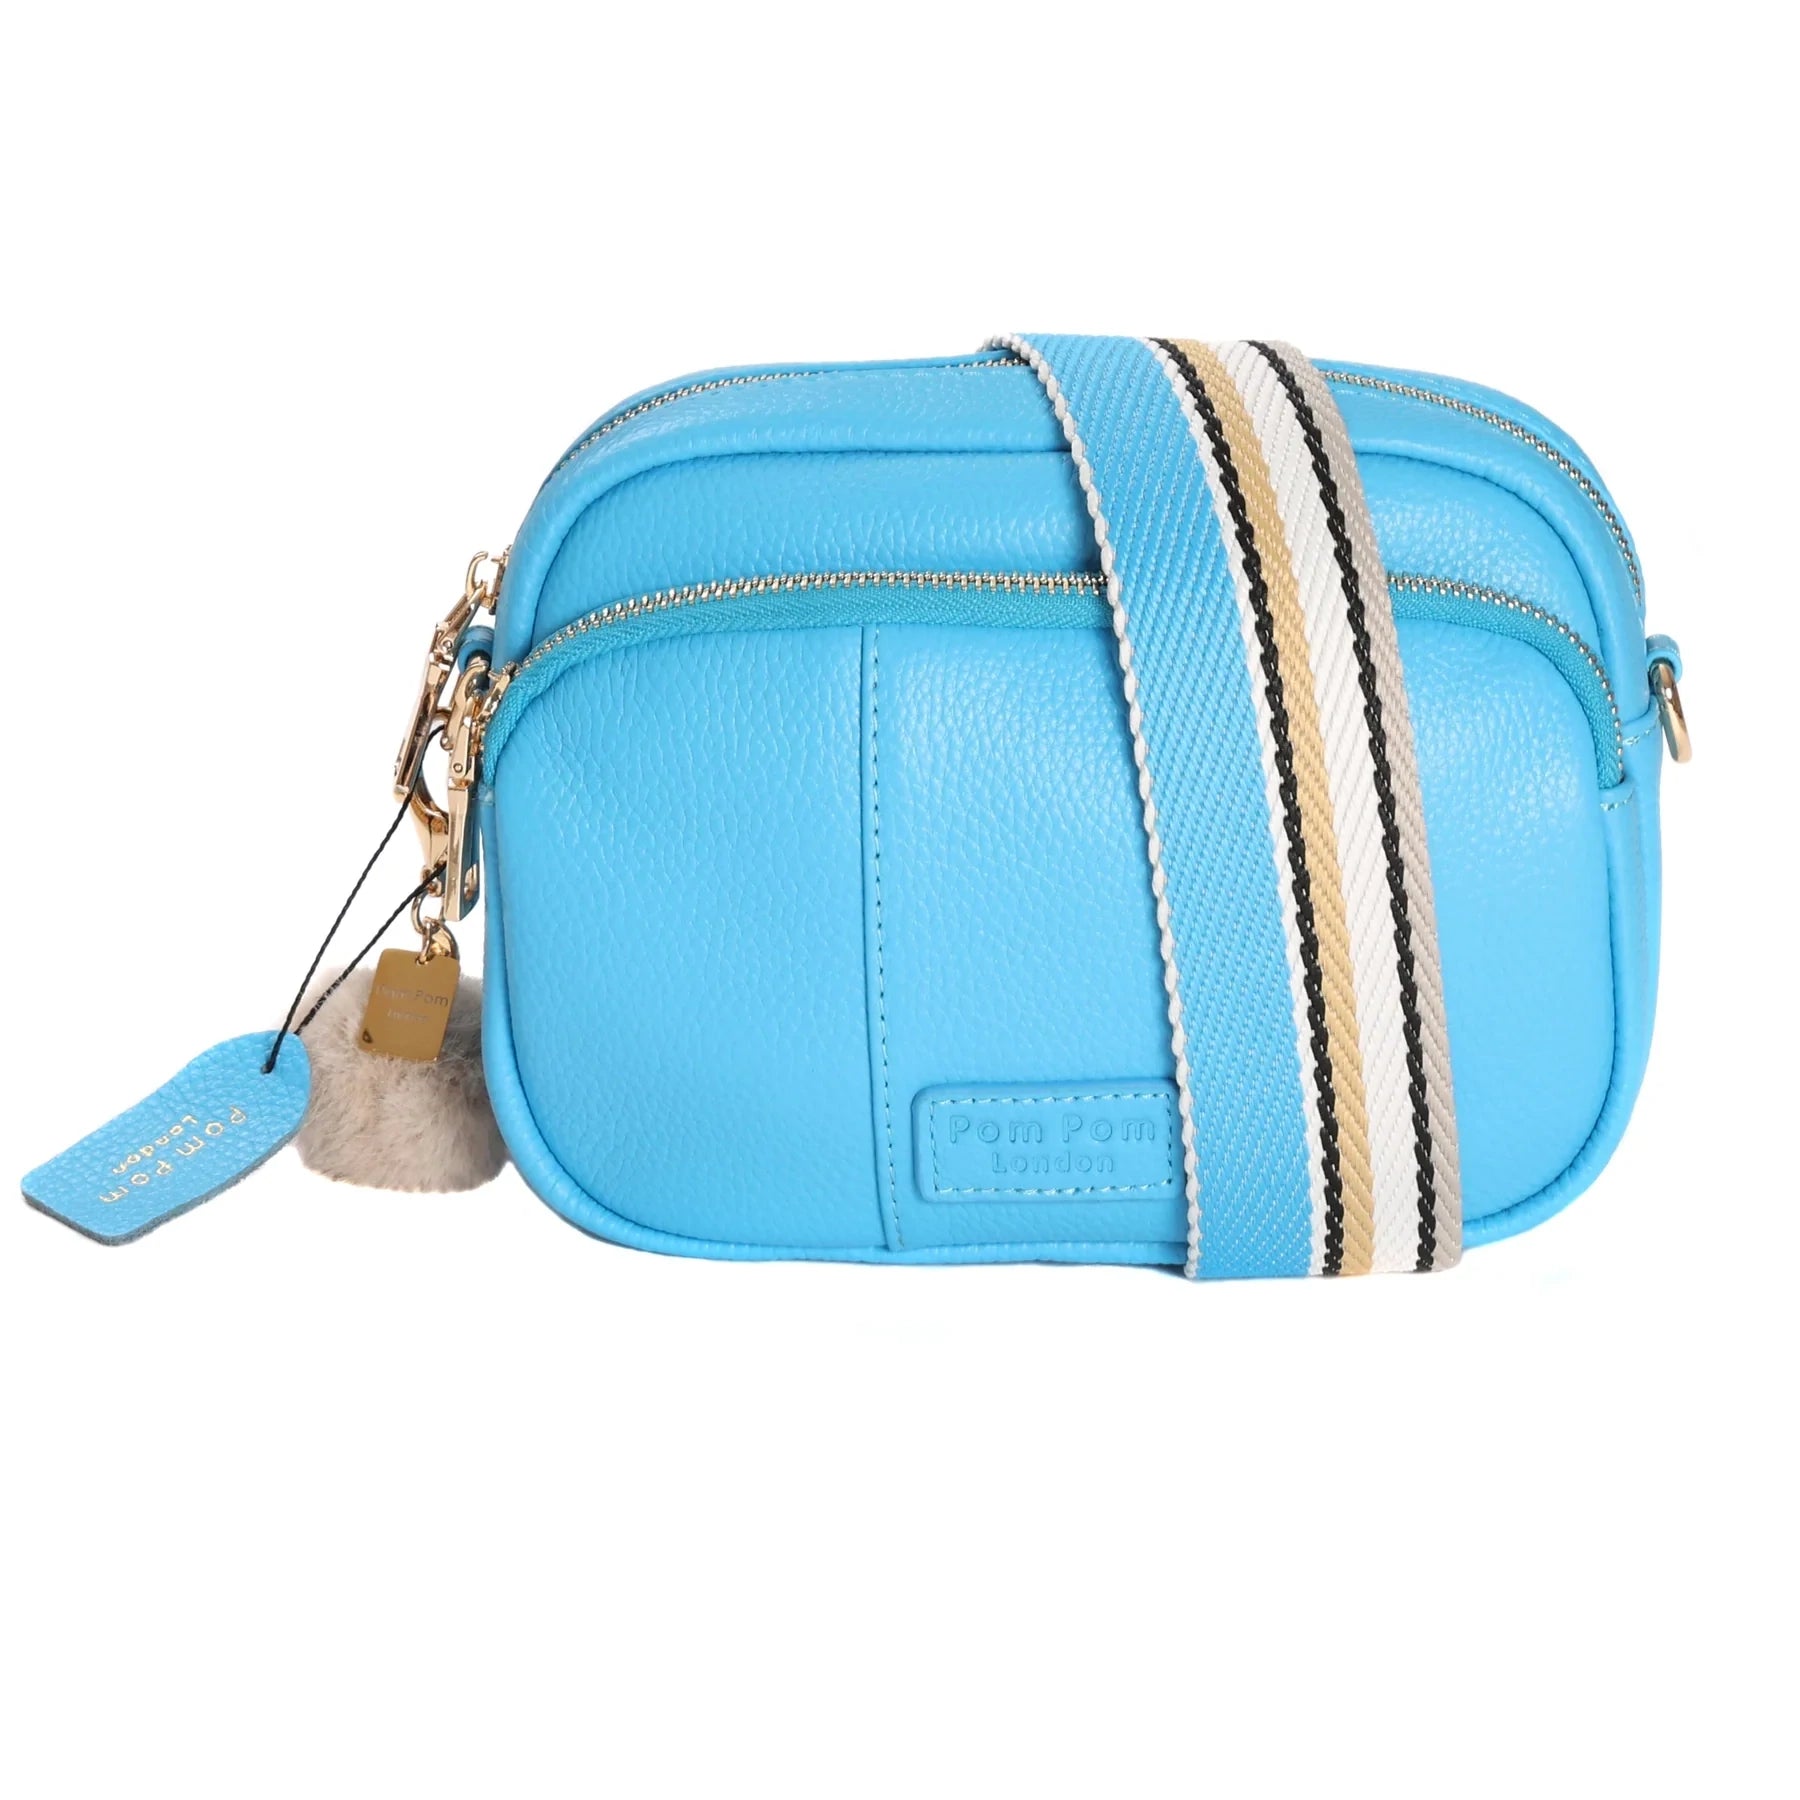 Mayfair Bag - Azure Blue